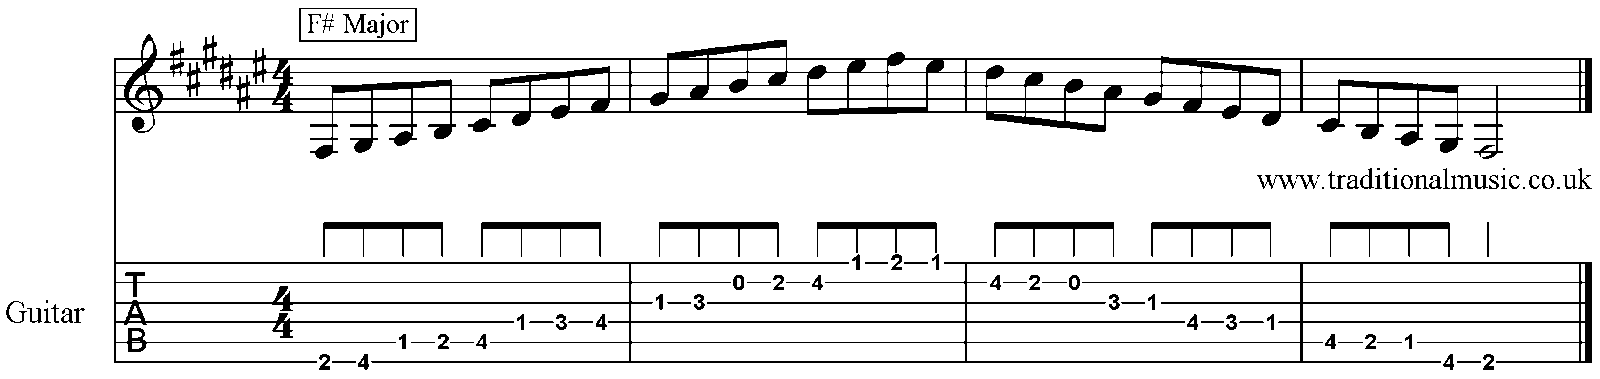 Major Scales for Banjo A